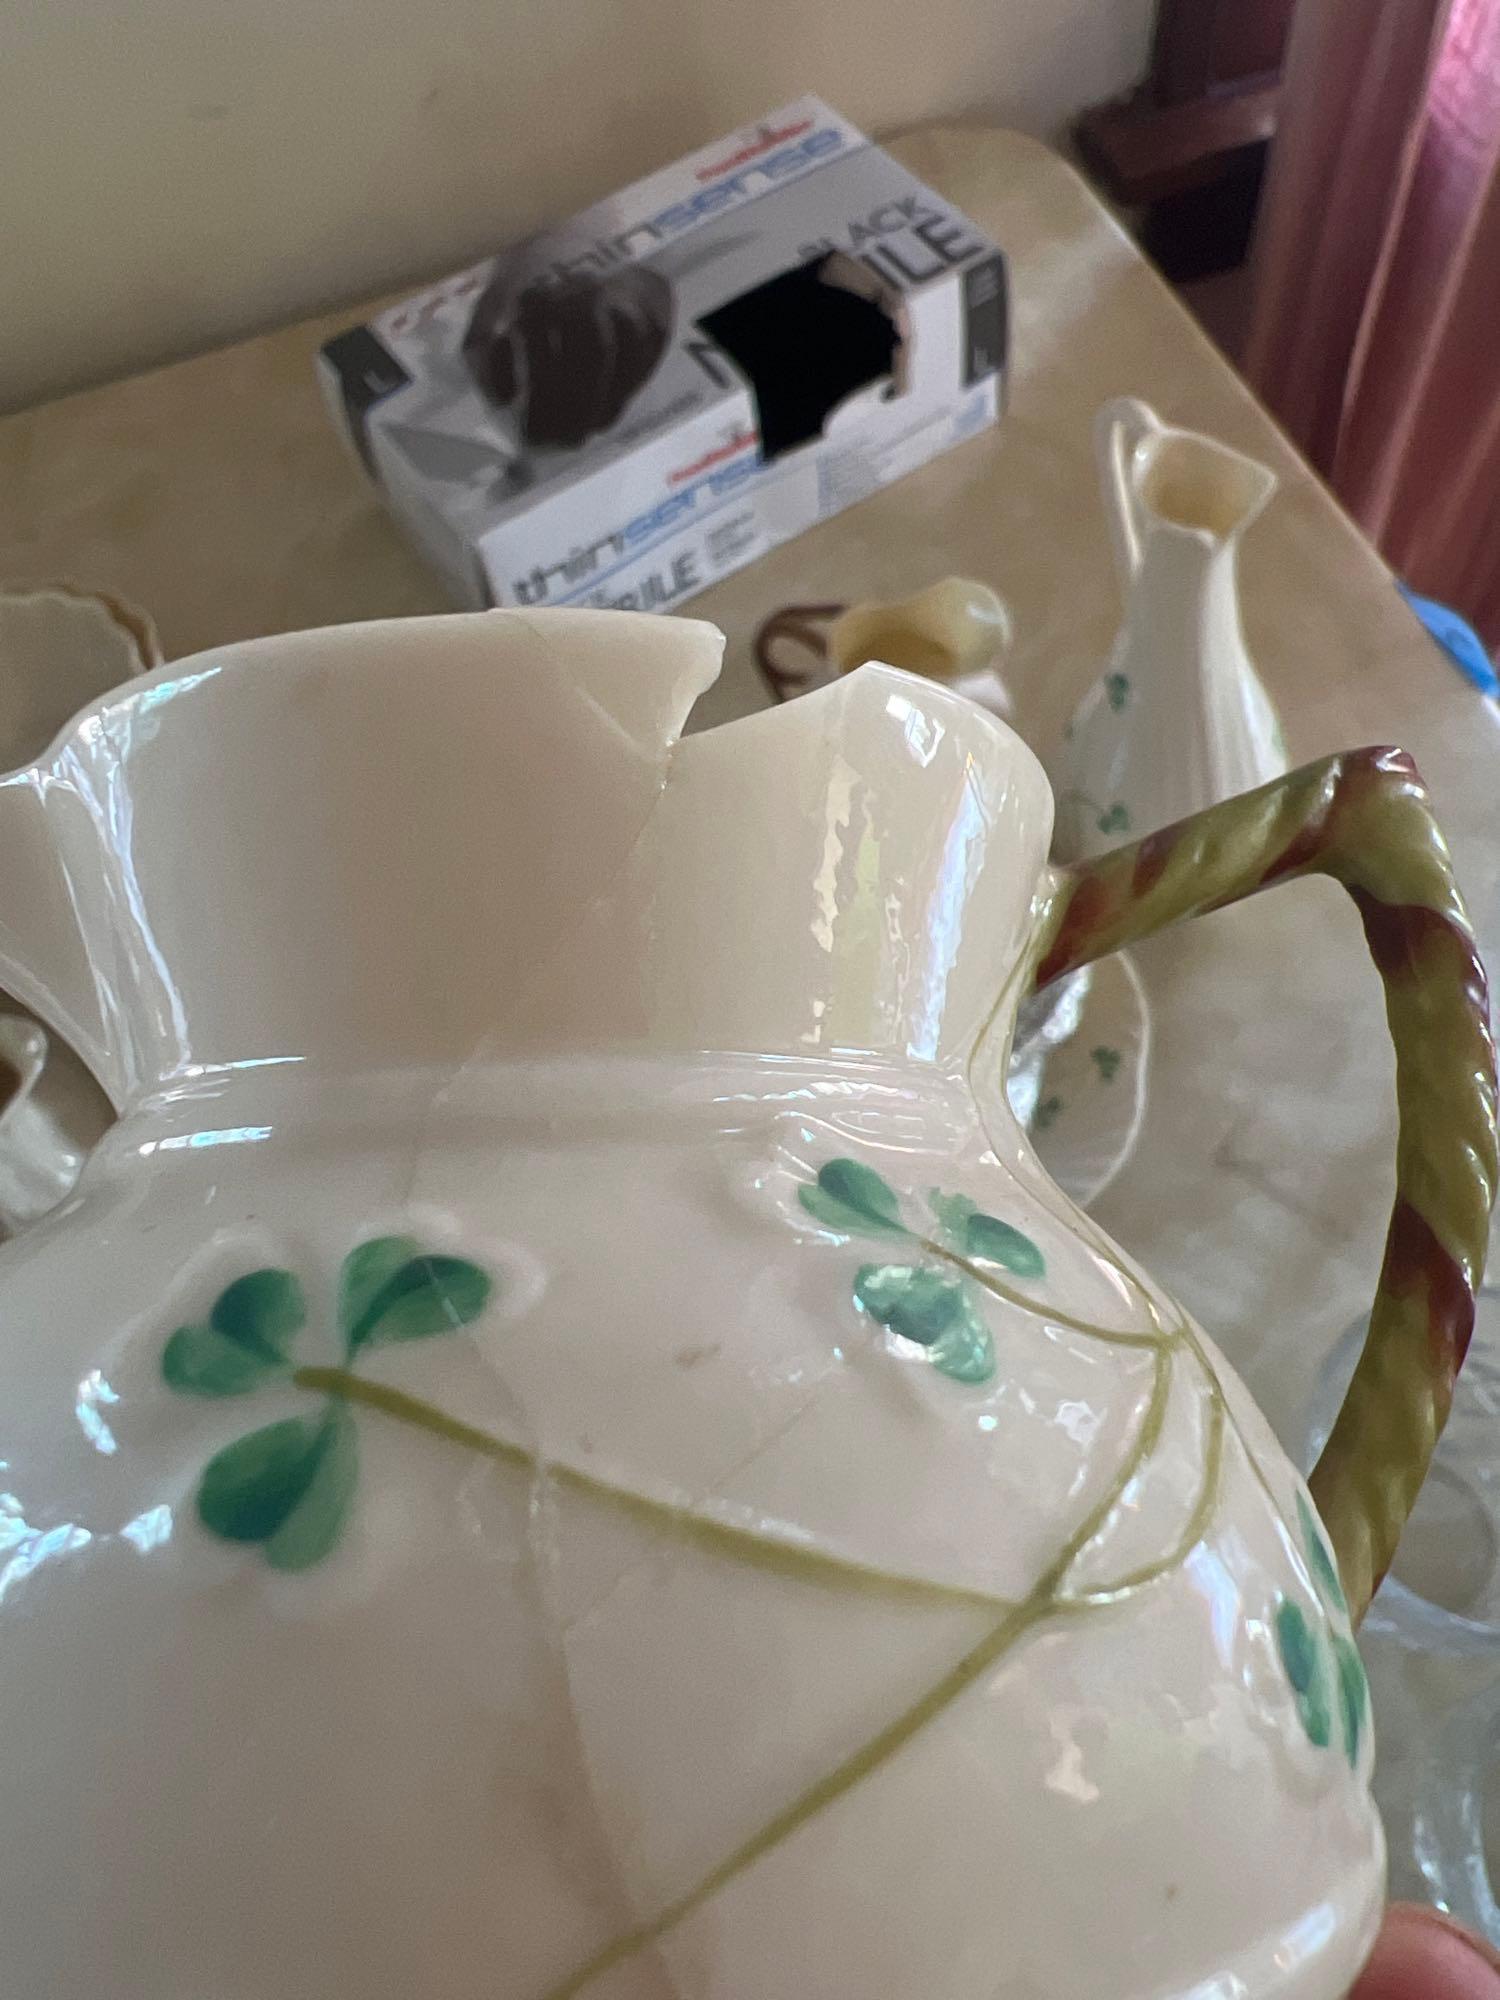 Belleek Ireland creamer tea cup and saucer